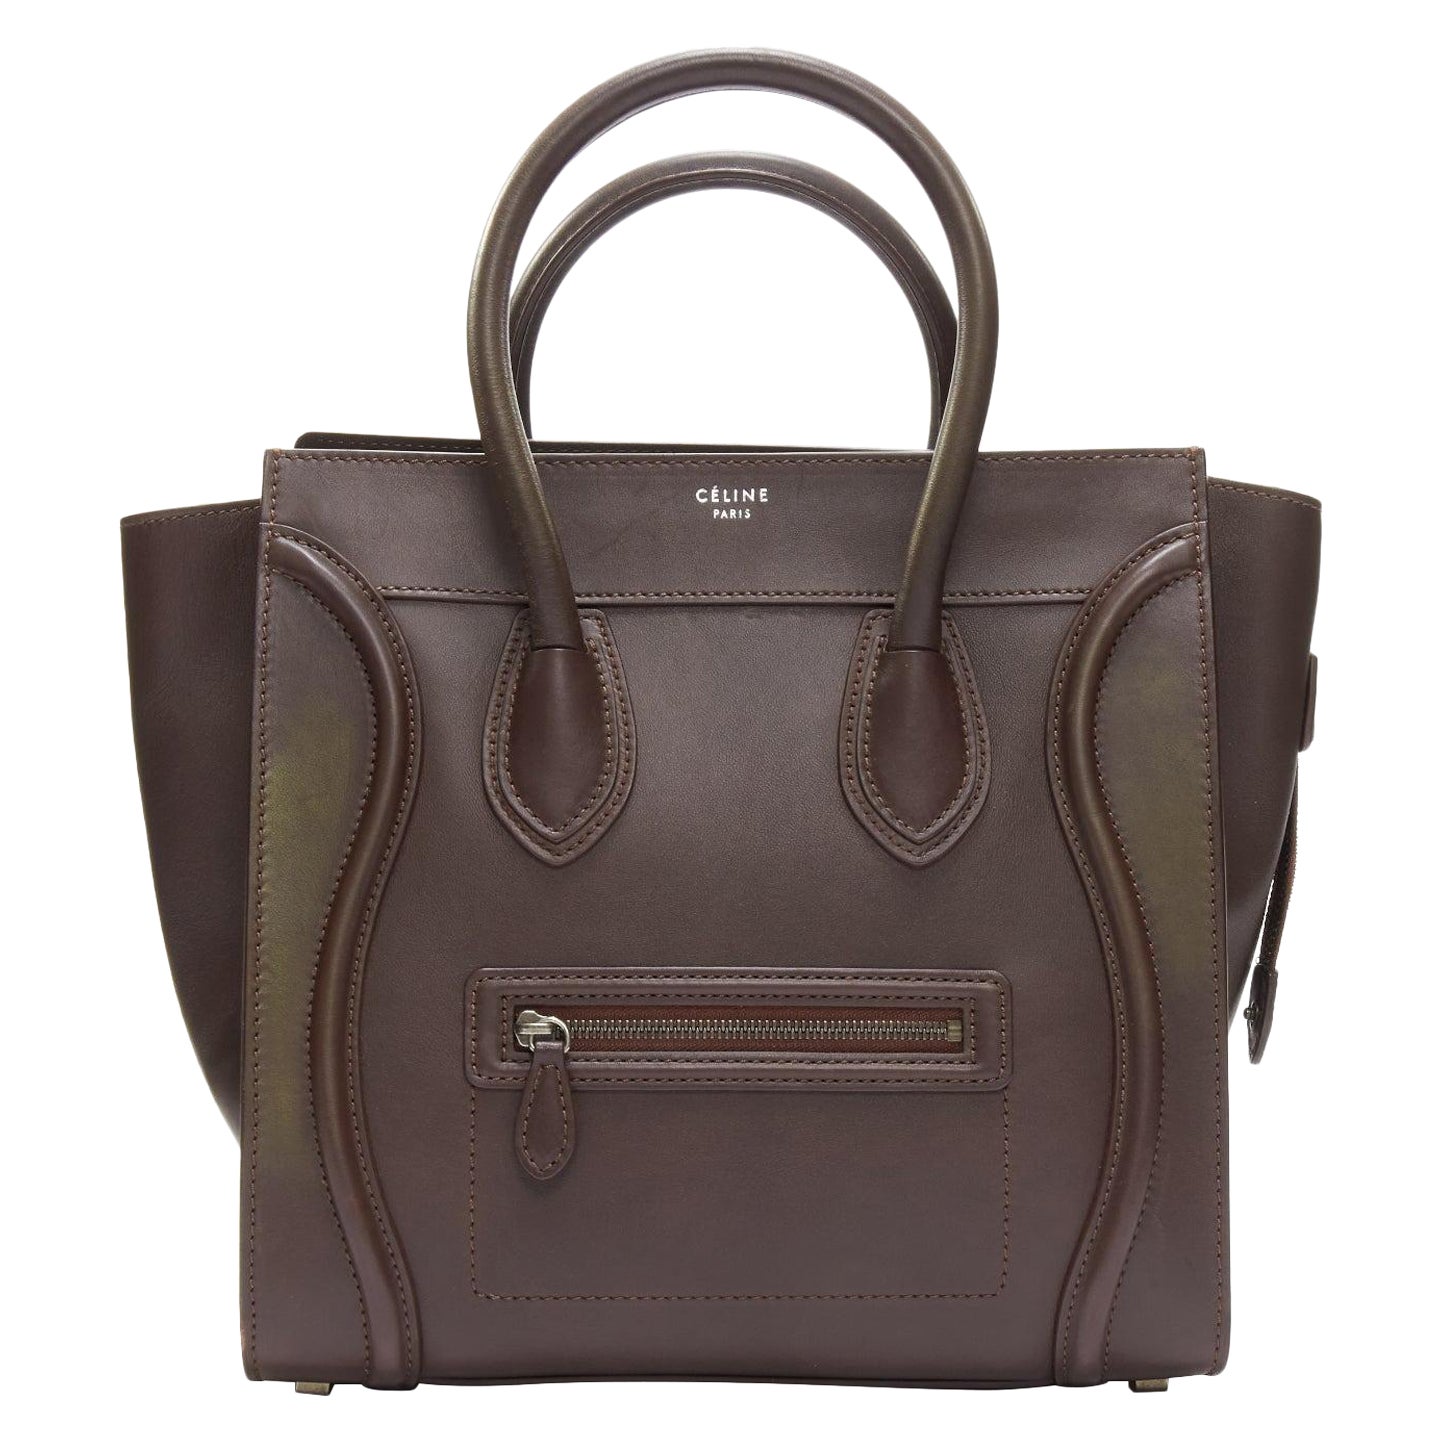 CELINE Luggage burgundy leather front zip logo shopper tote bag